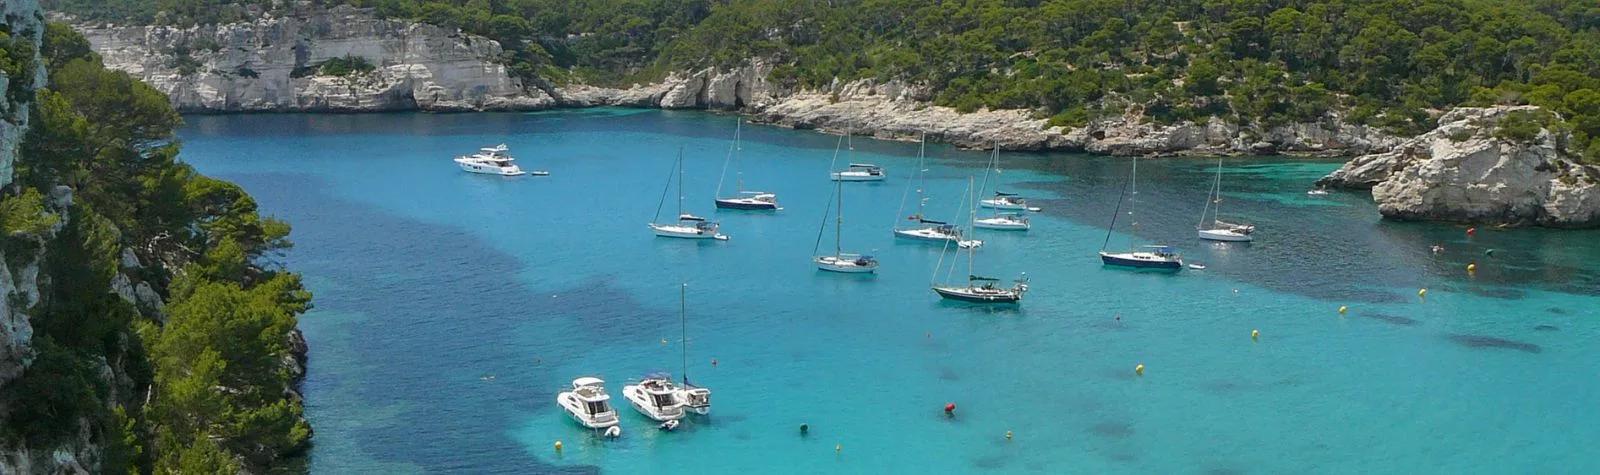 Cala Galdana Beach: The Turquoise Jewel of Menorca